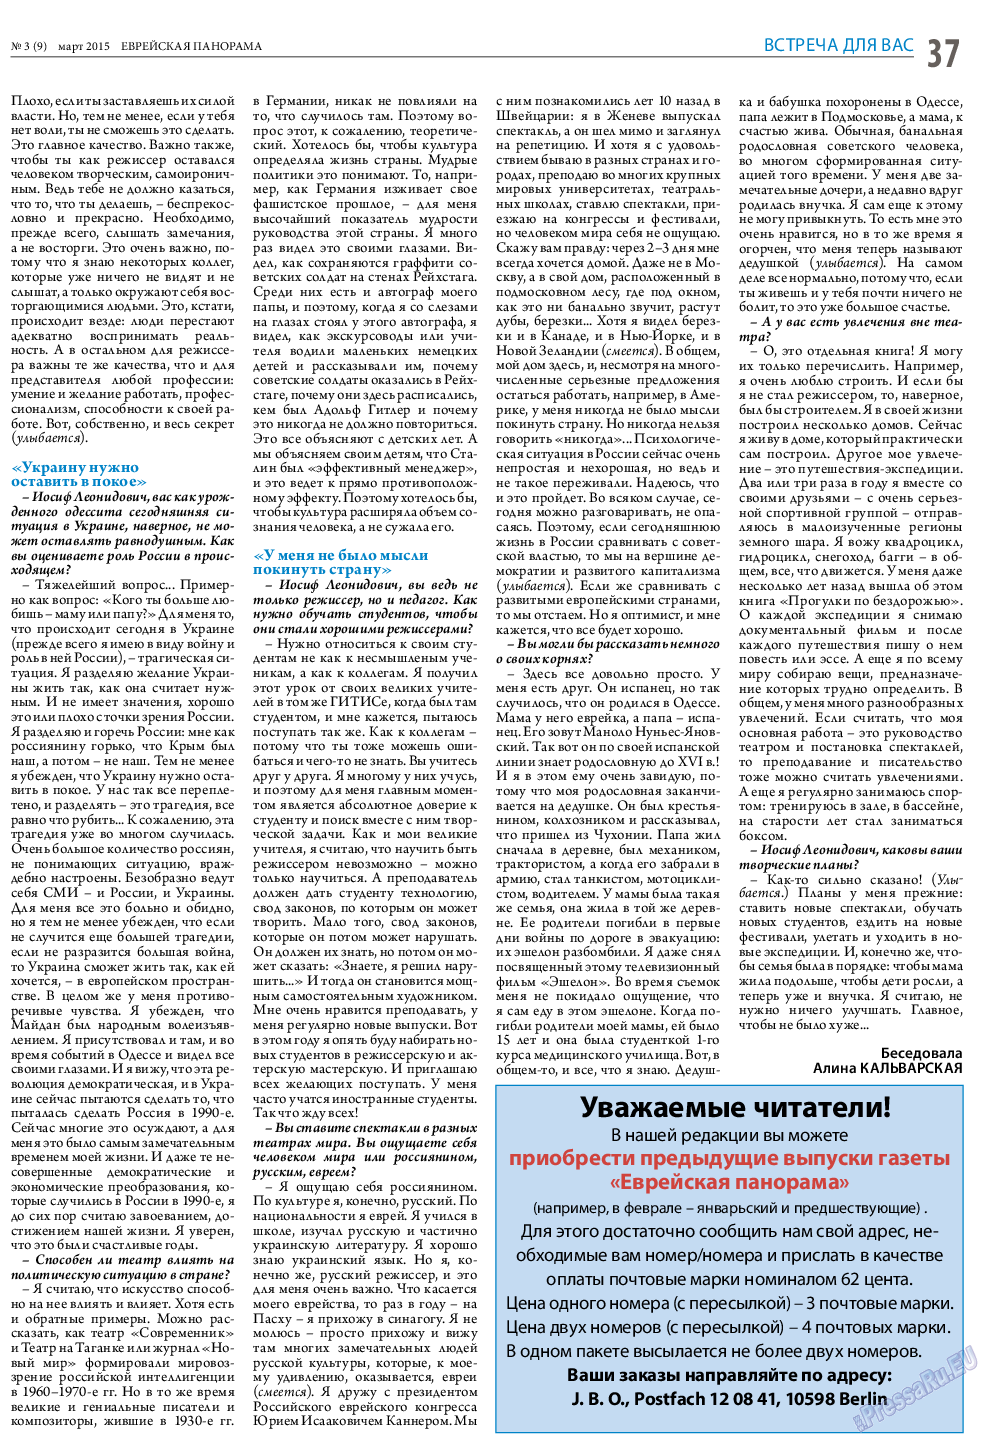 Еврейская панорама, газета. 2015 №3 стр.37